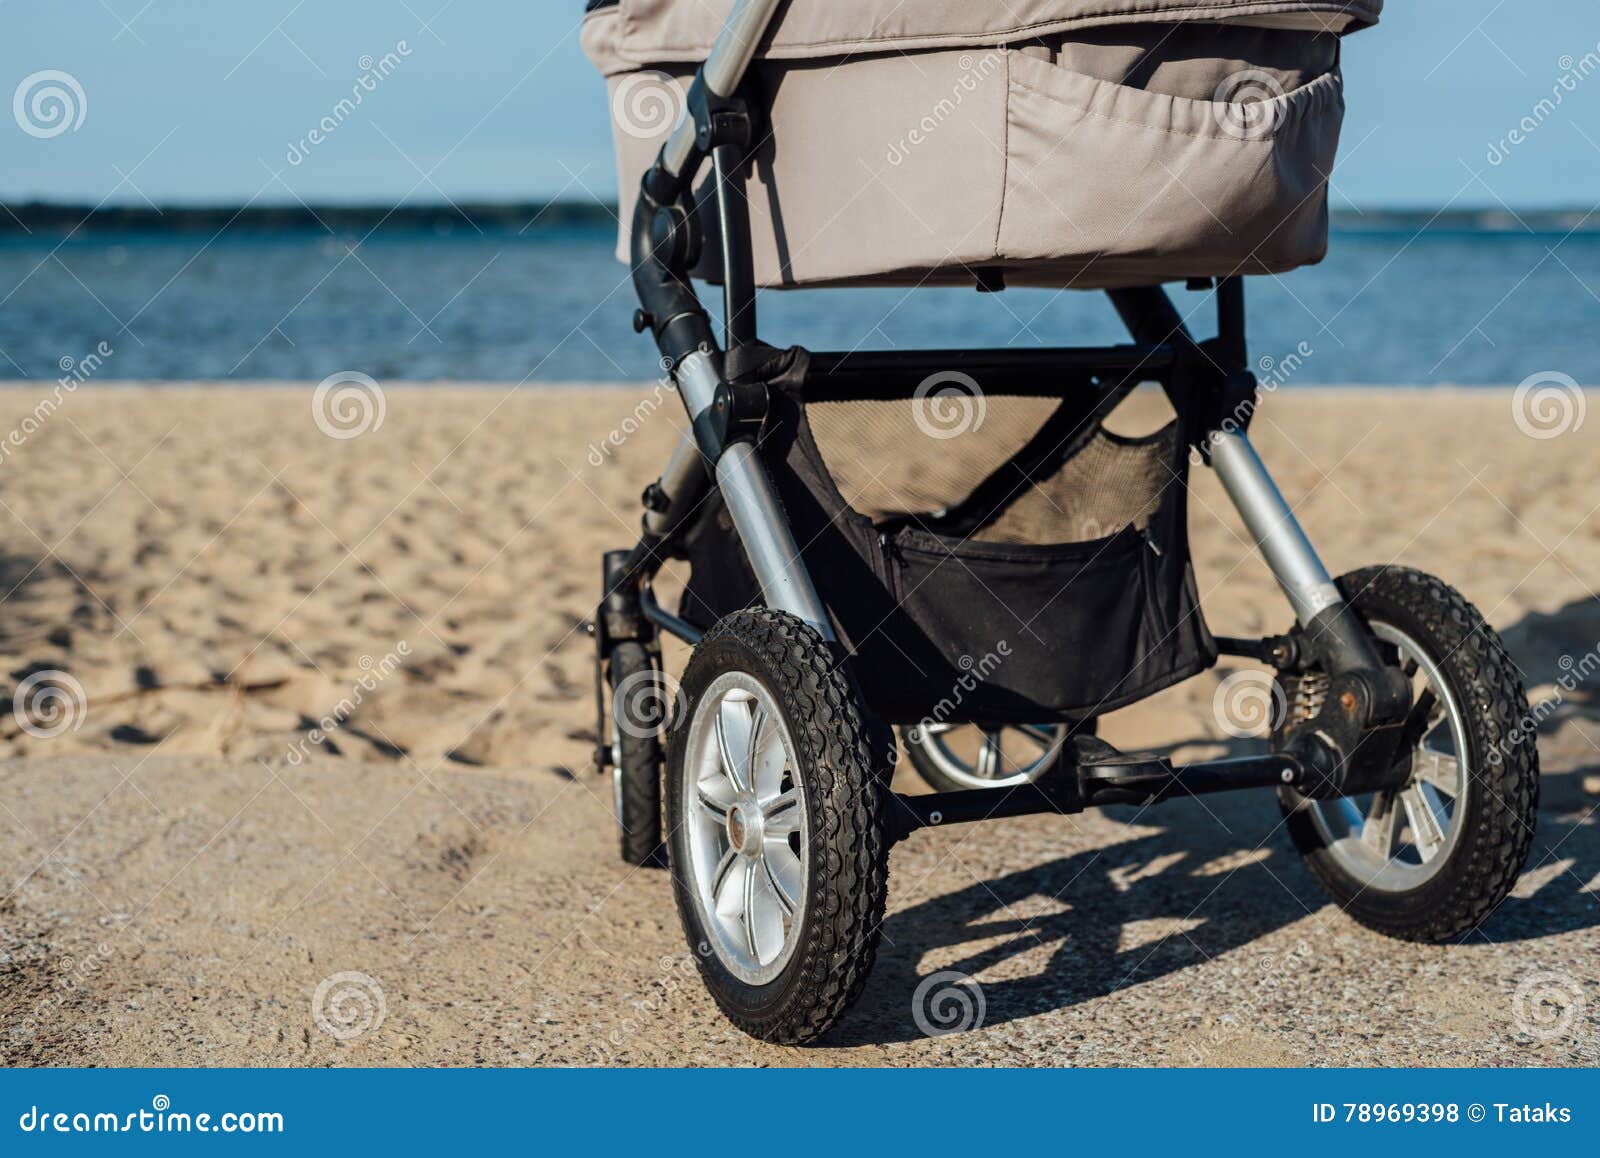 stroller for beach sand